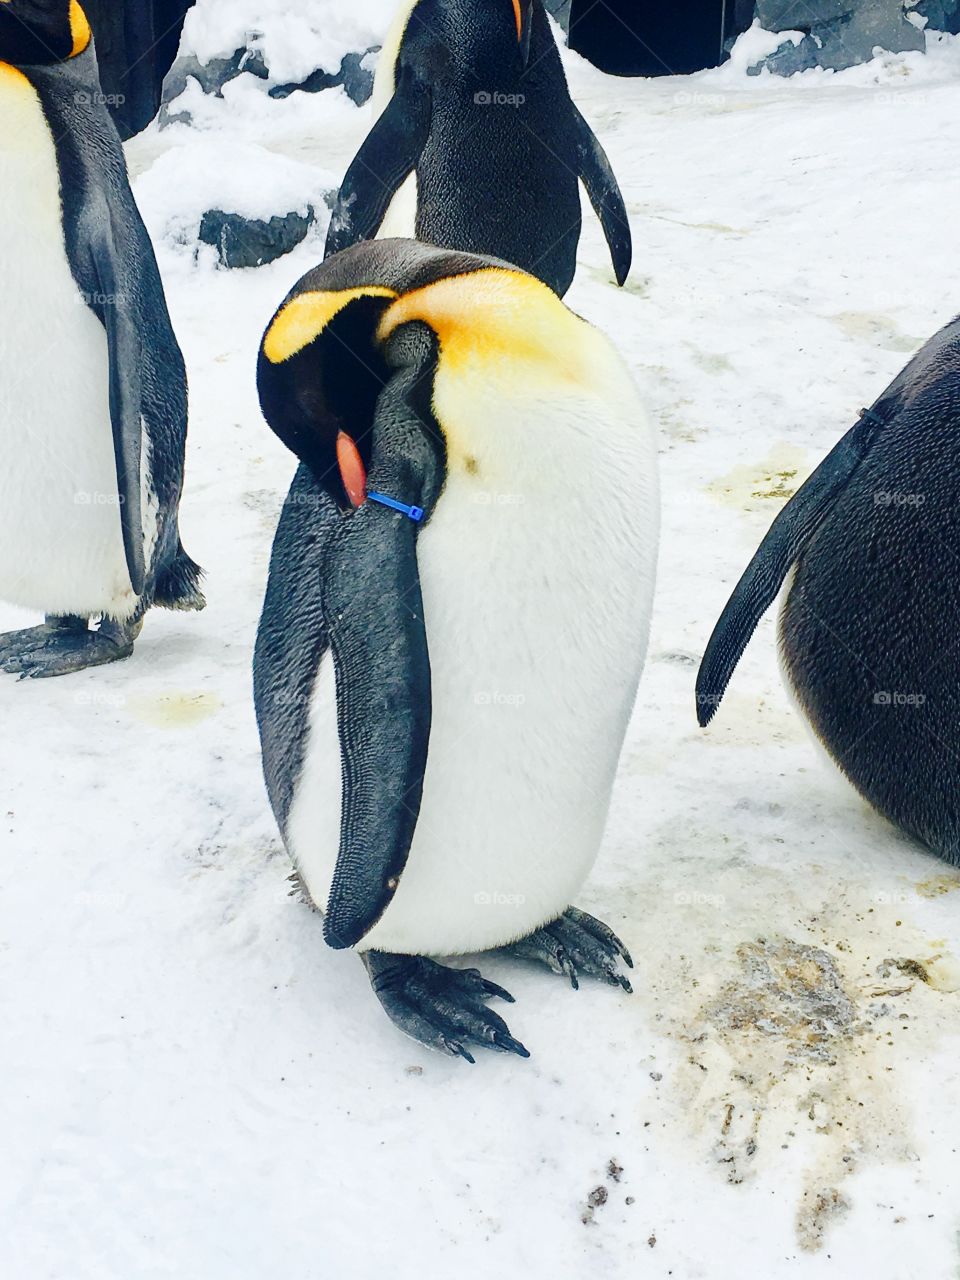 Penguins sleep parade animal zoo with snow